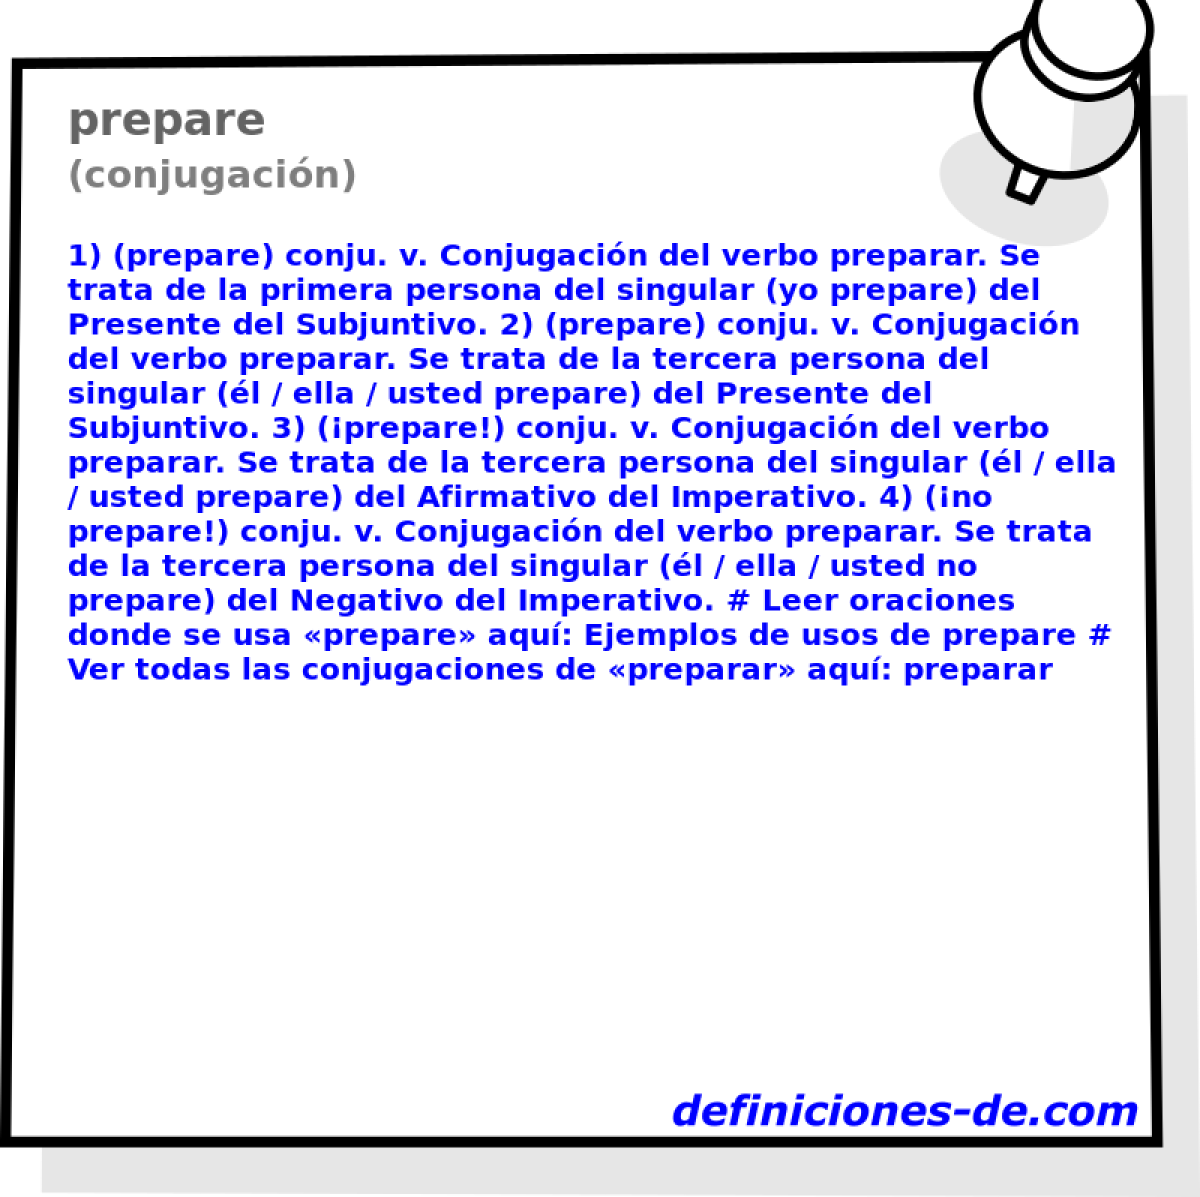 prepare (conjugacin)